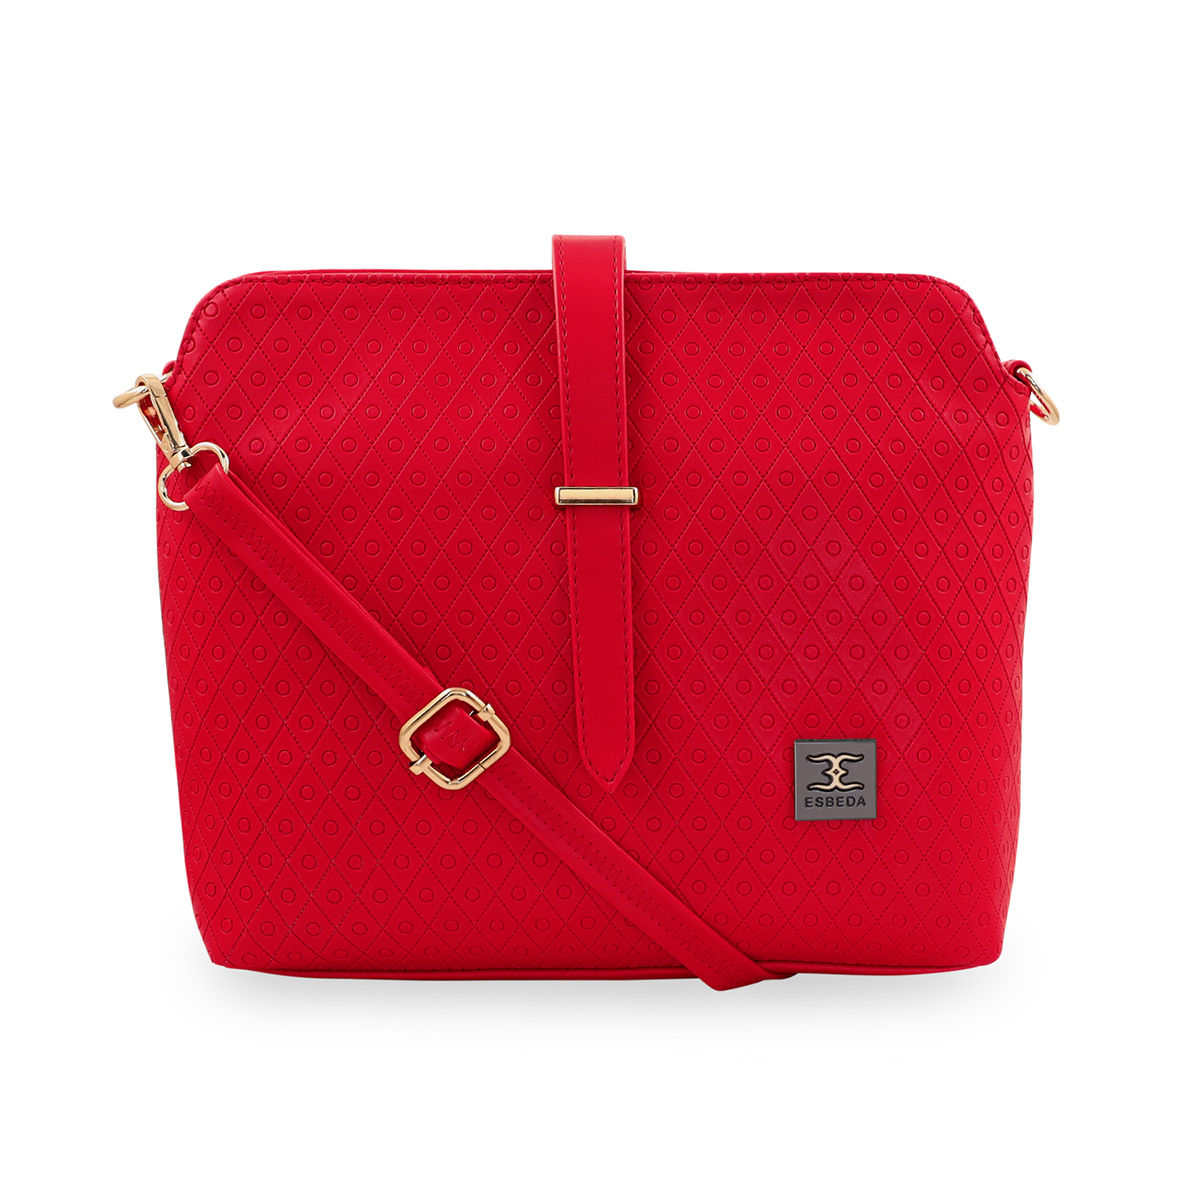 Buy ESBEDA Brown Color Croco Emboss Mini Sling Bag For Women at Amazon.in